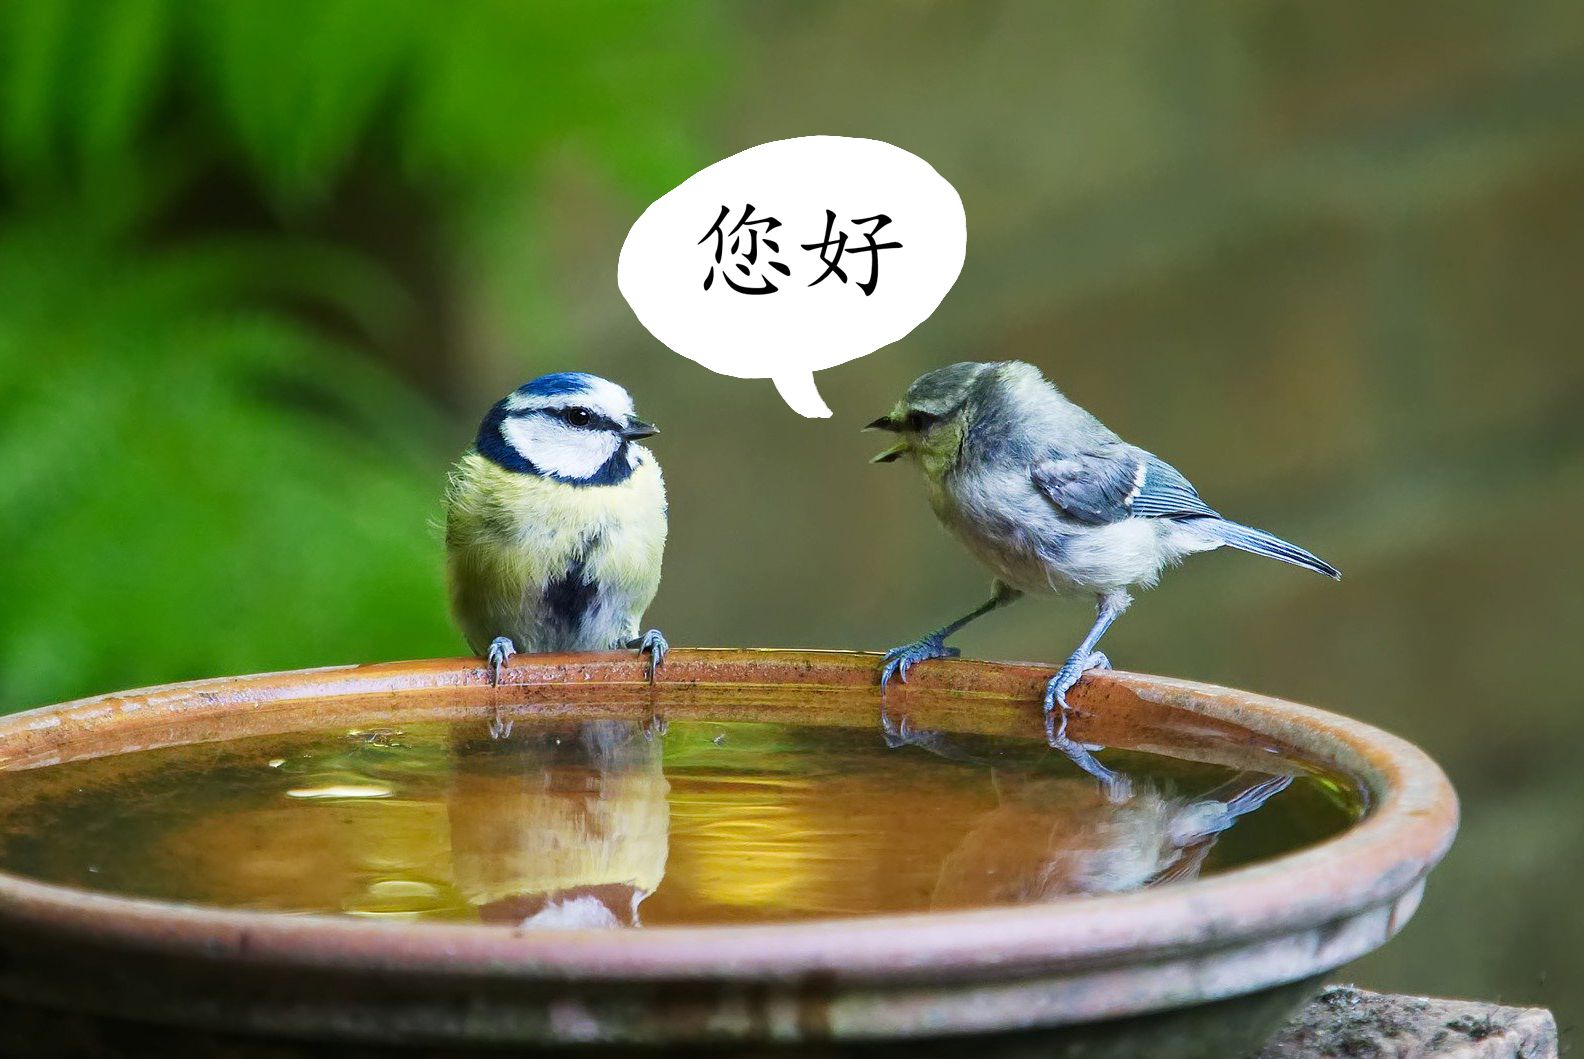 Birds speaking Chinese